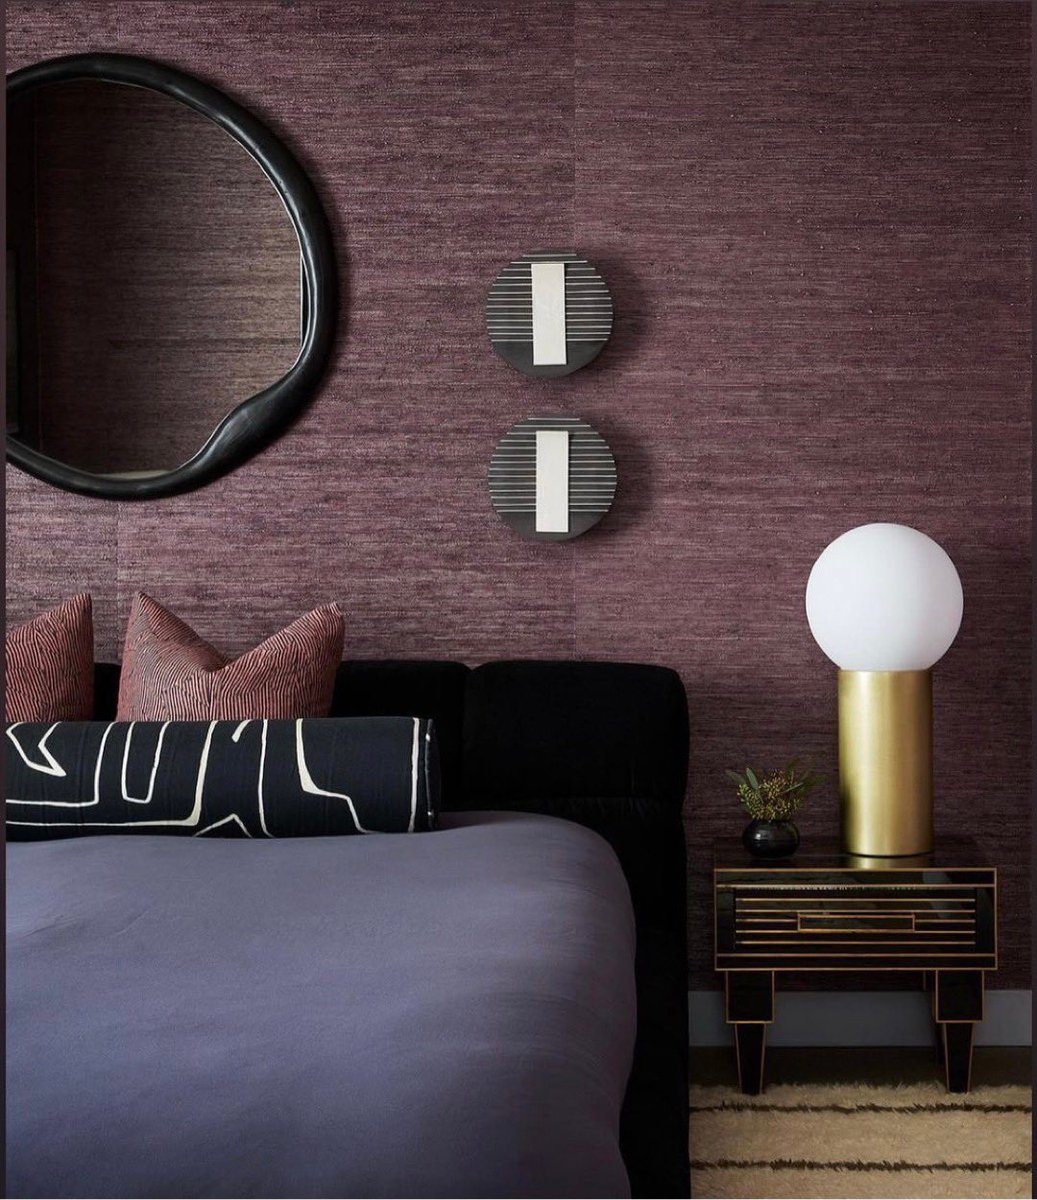 Exquisite master bedroom designed by Jen Talbot Design. Loving the colour scheme. #kellywearstler #moderninteriordesign #archdigest #masterbedroomdecor #wallpaper #interiors #interiordesign #interiorstyling #interiordesigner #interior #interiorinspo #interiordesignideas